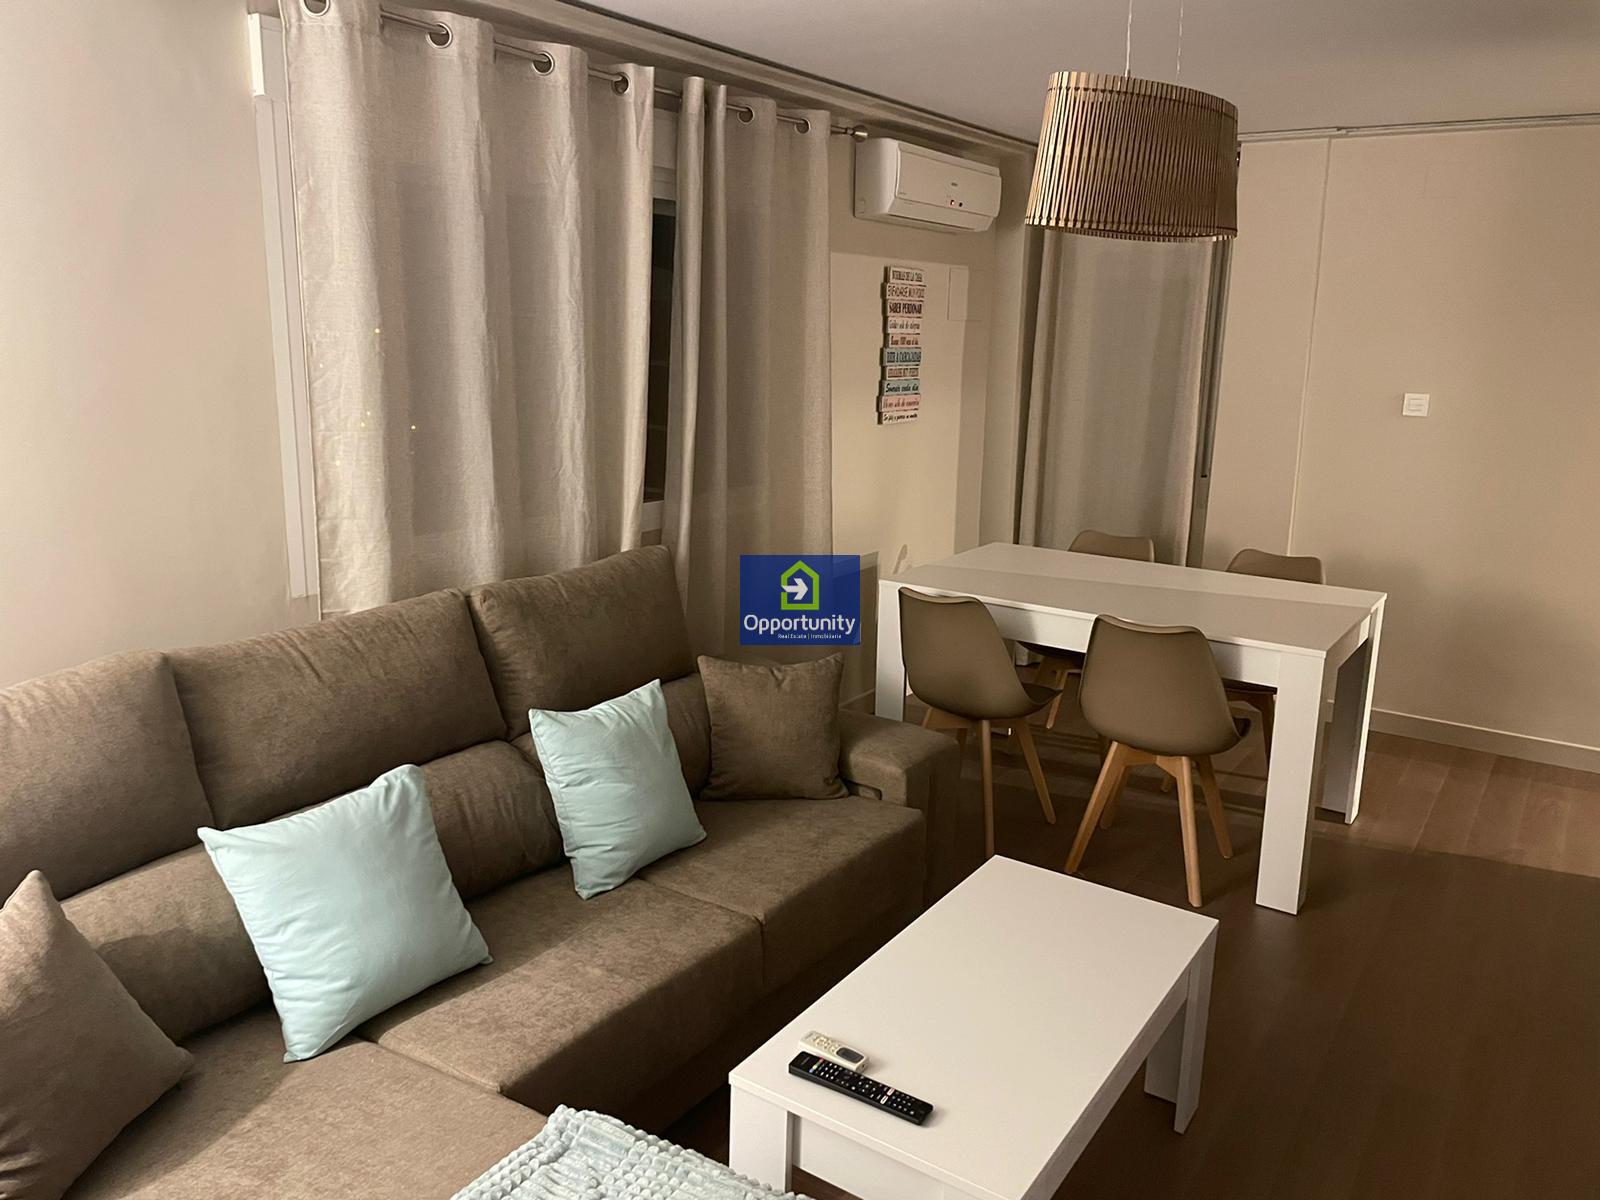 Flat for rent in Campo Verde (Granada), 800 €/month (Season)